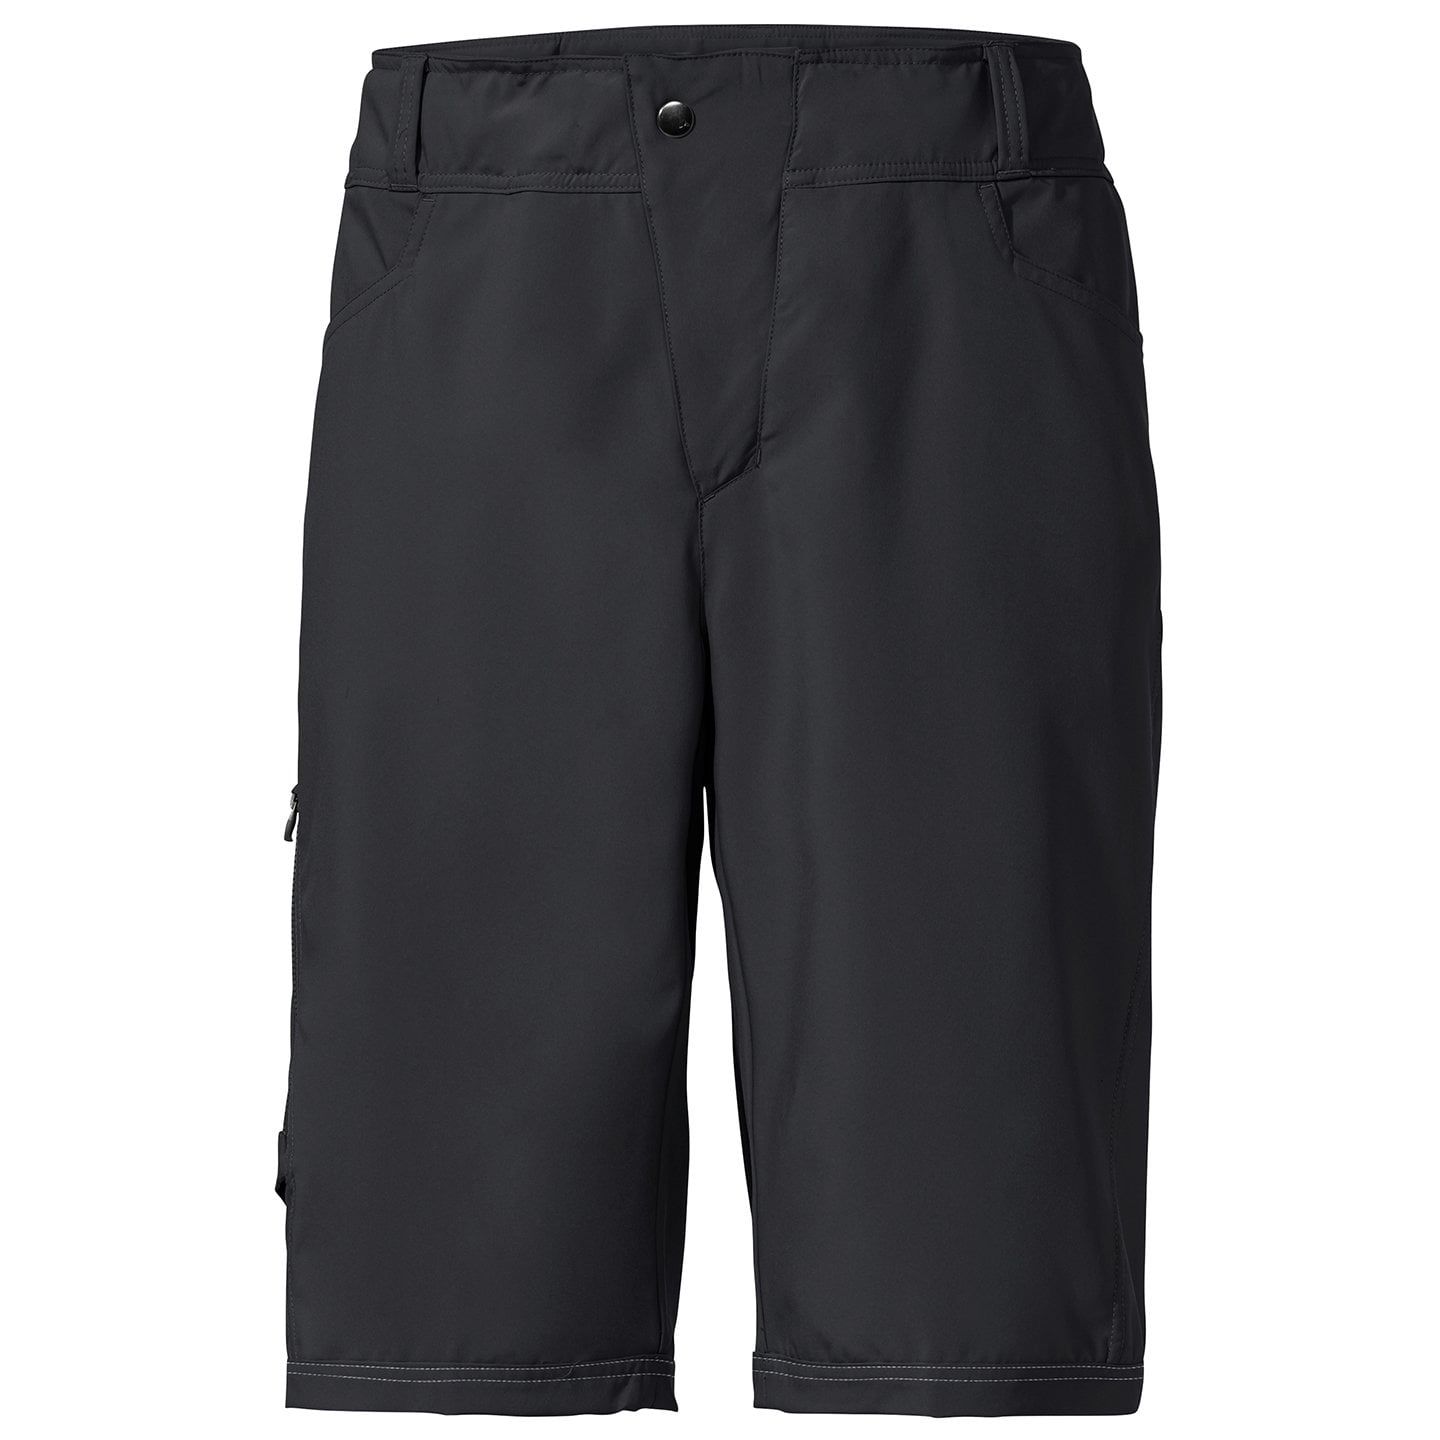 VAUDE Men's Ledro Shorts (Bild 1)